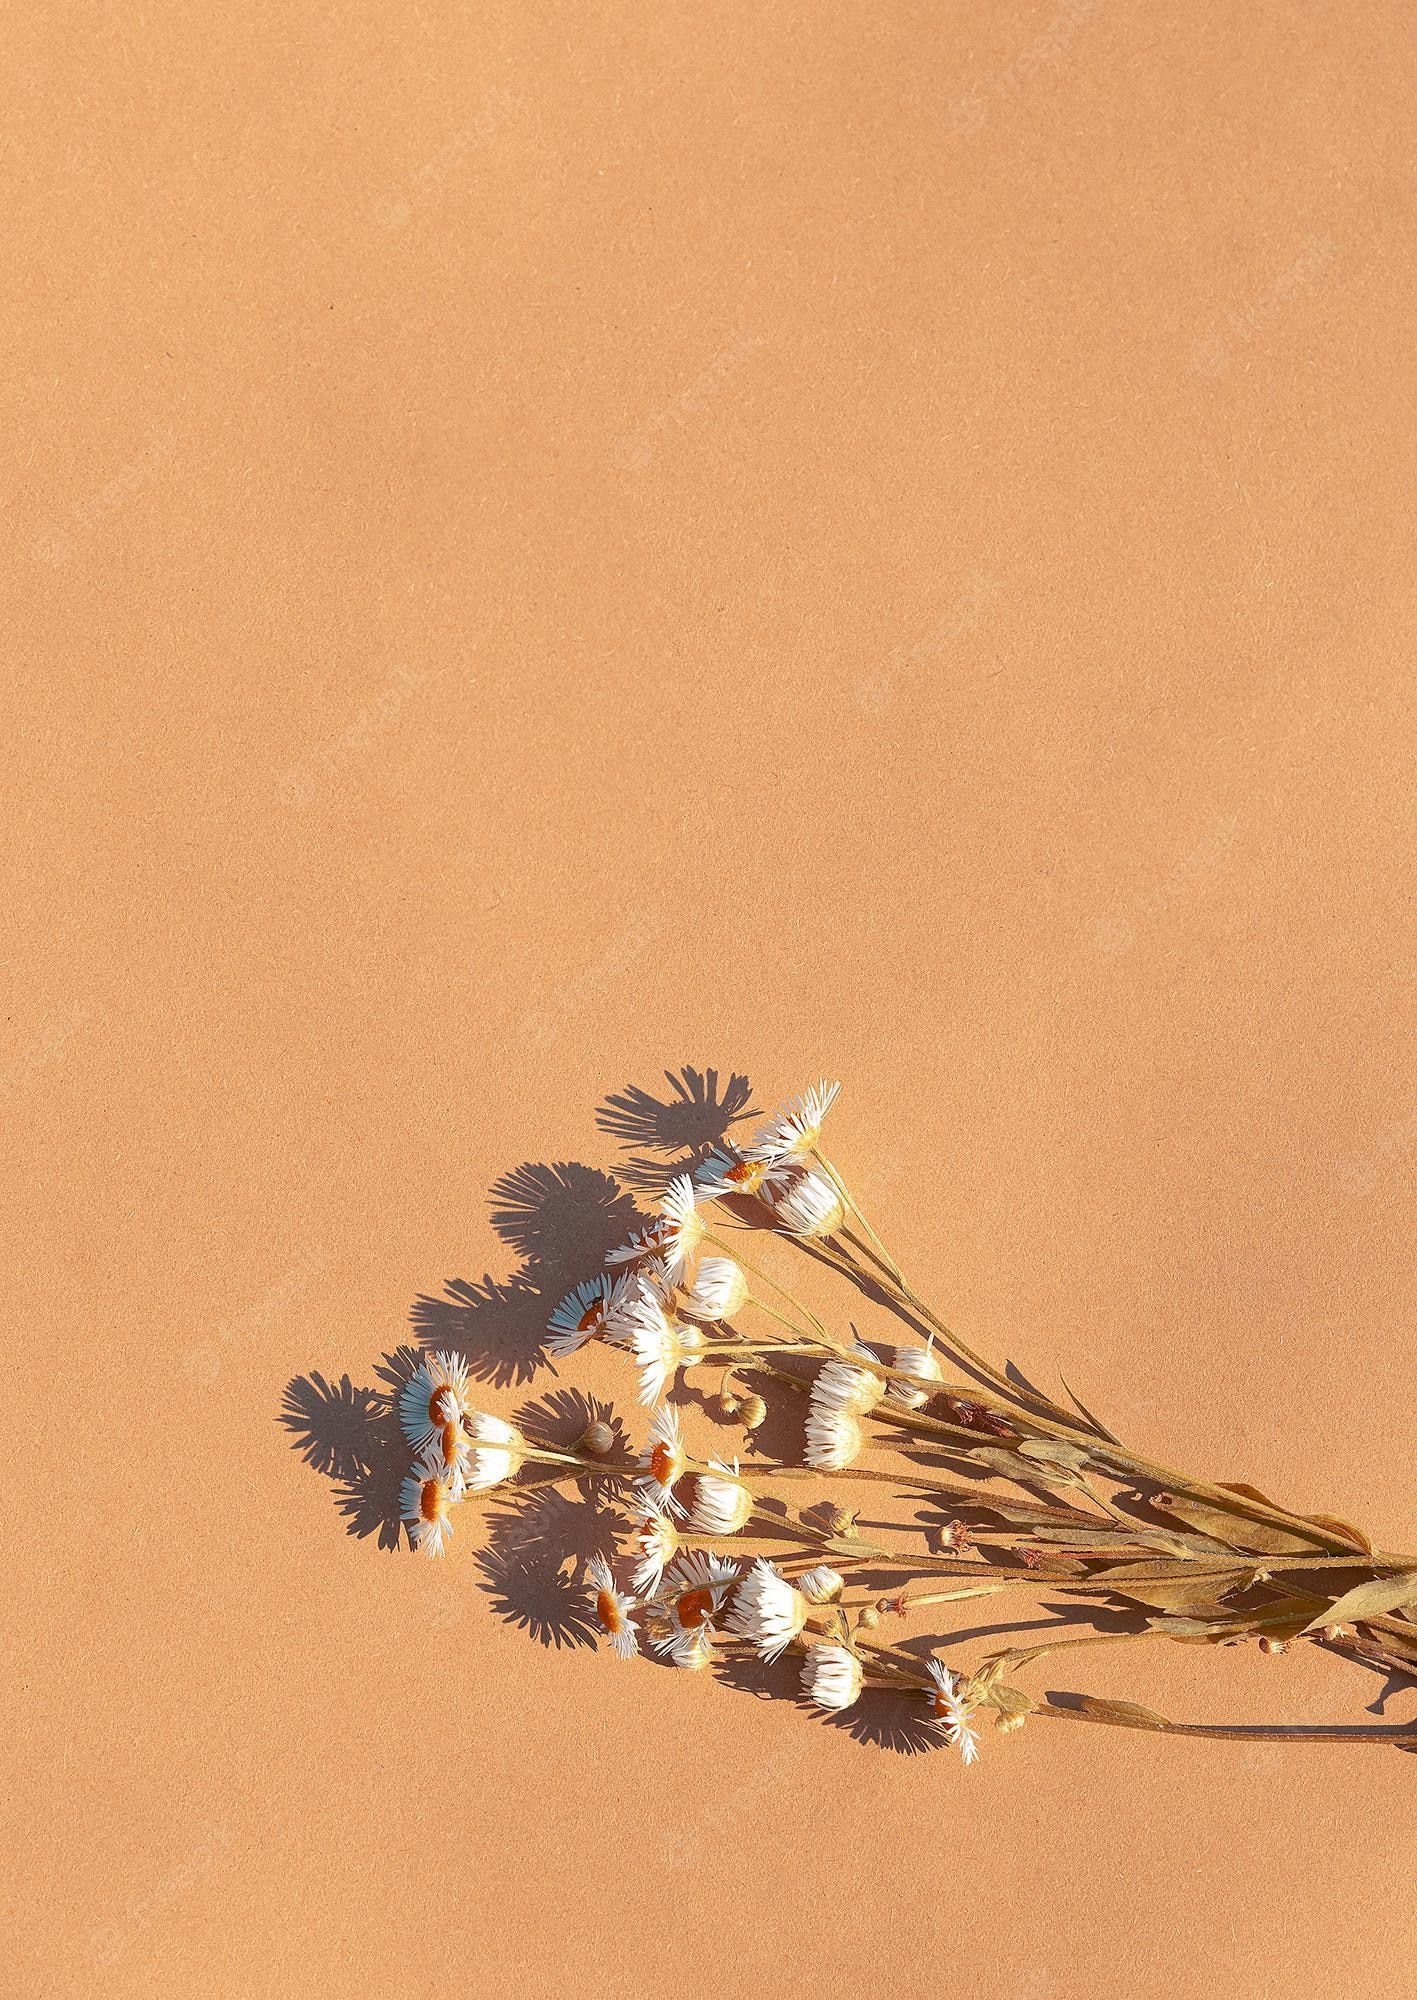 Premium Photo. Chamomile bouquet on beige background. summer sunlight shadows. aesthetic minimal wallpaper. stylish plant composition